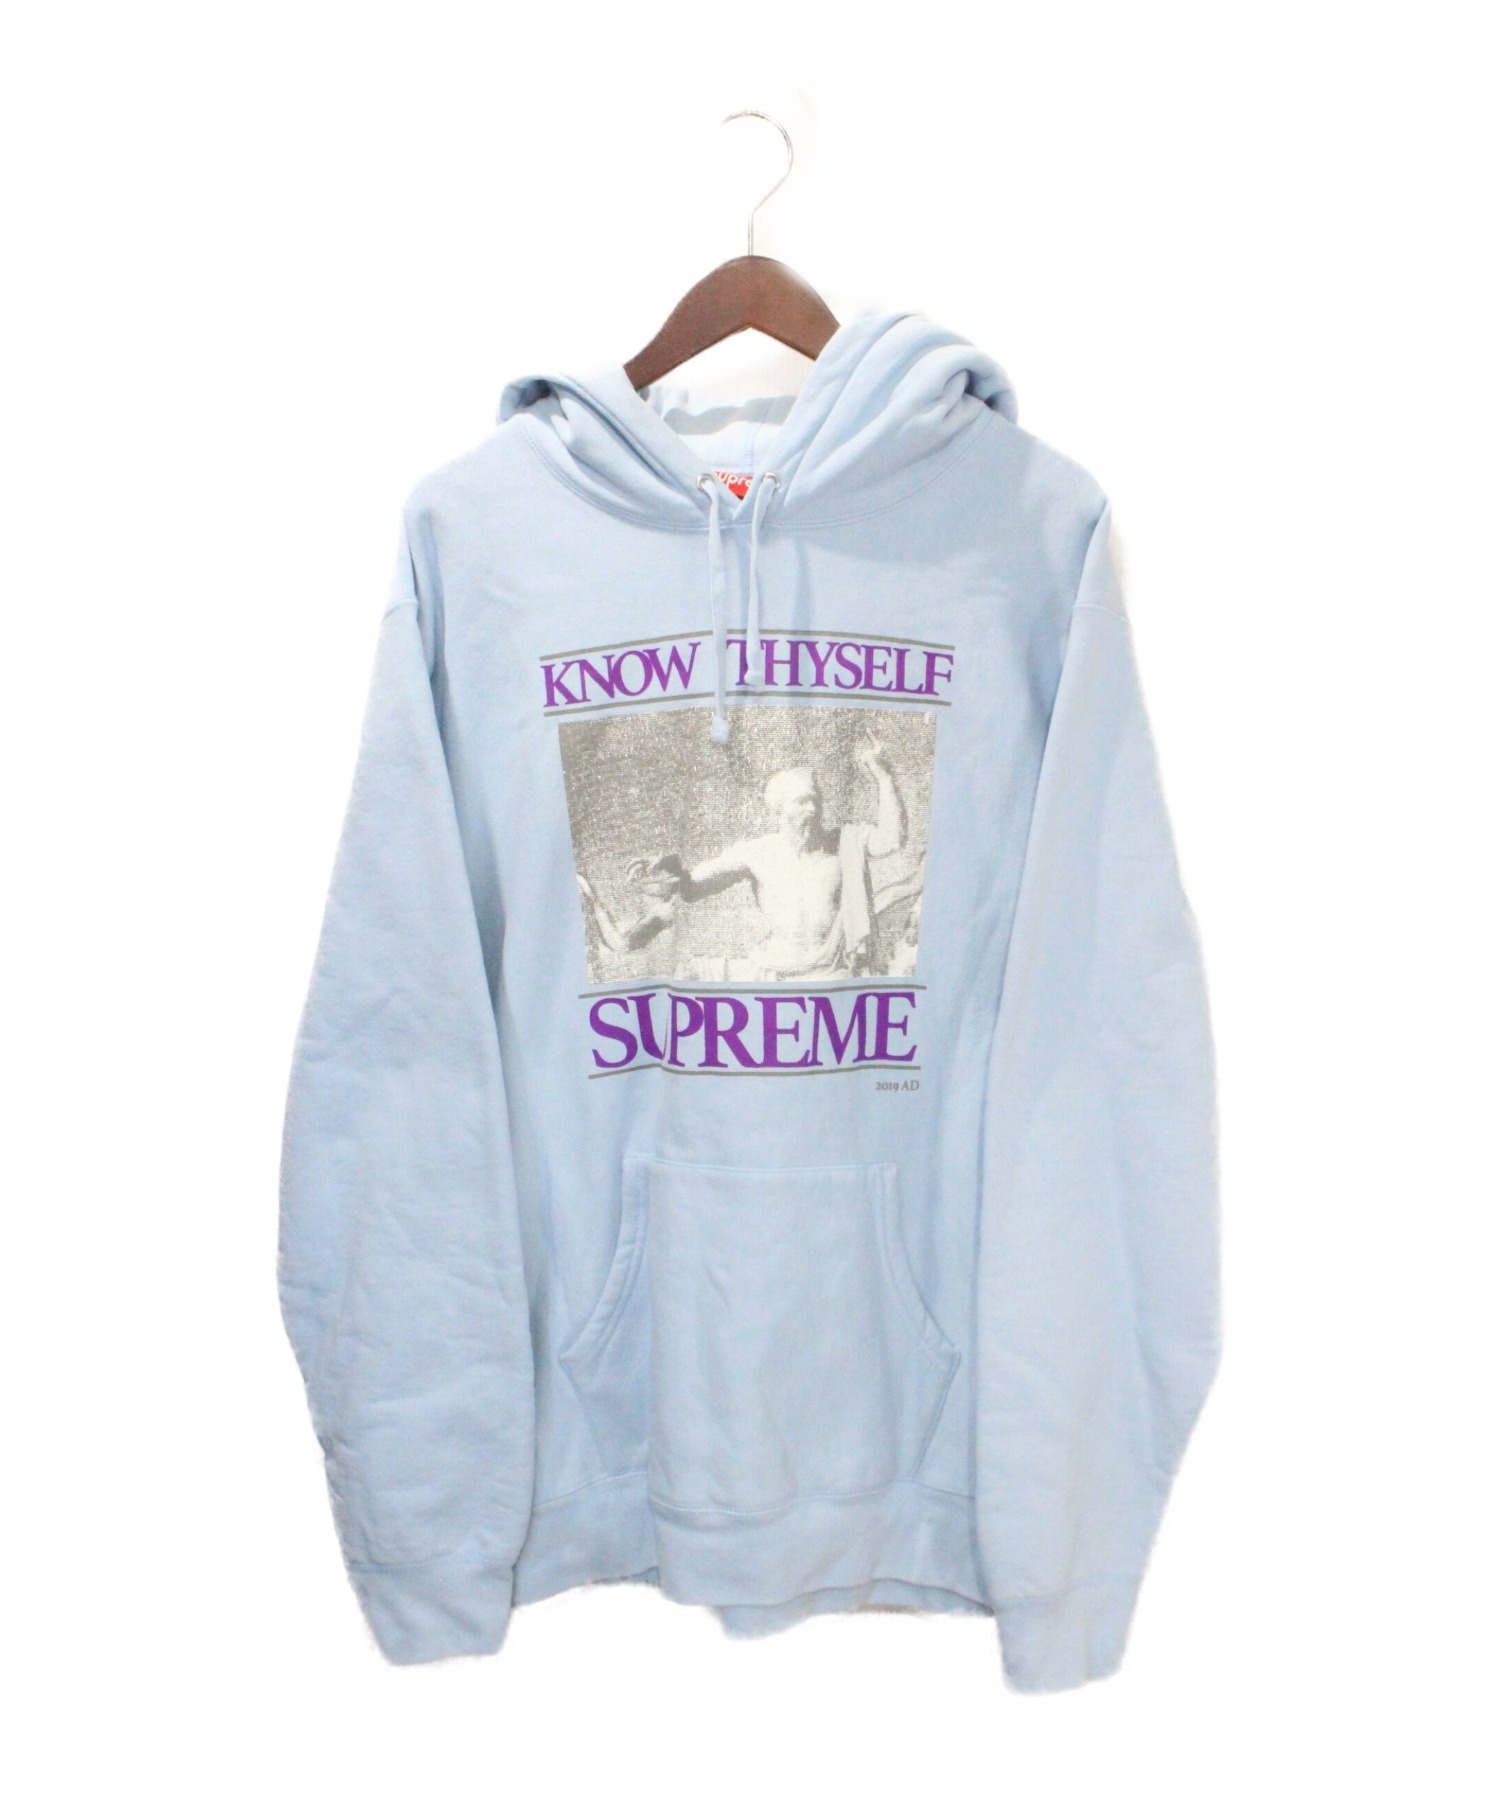 SUPREME (シュプリーム) Know Thyself Hooded Sweatshirt スカイブルー サイズ:XL